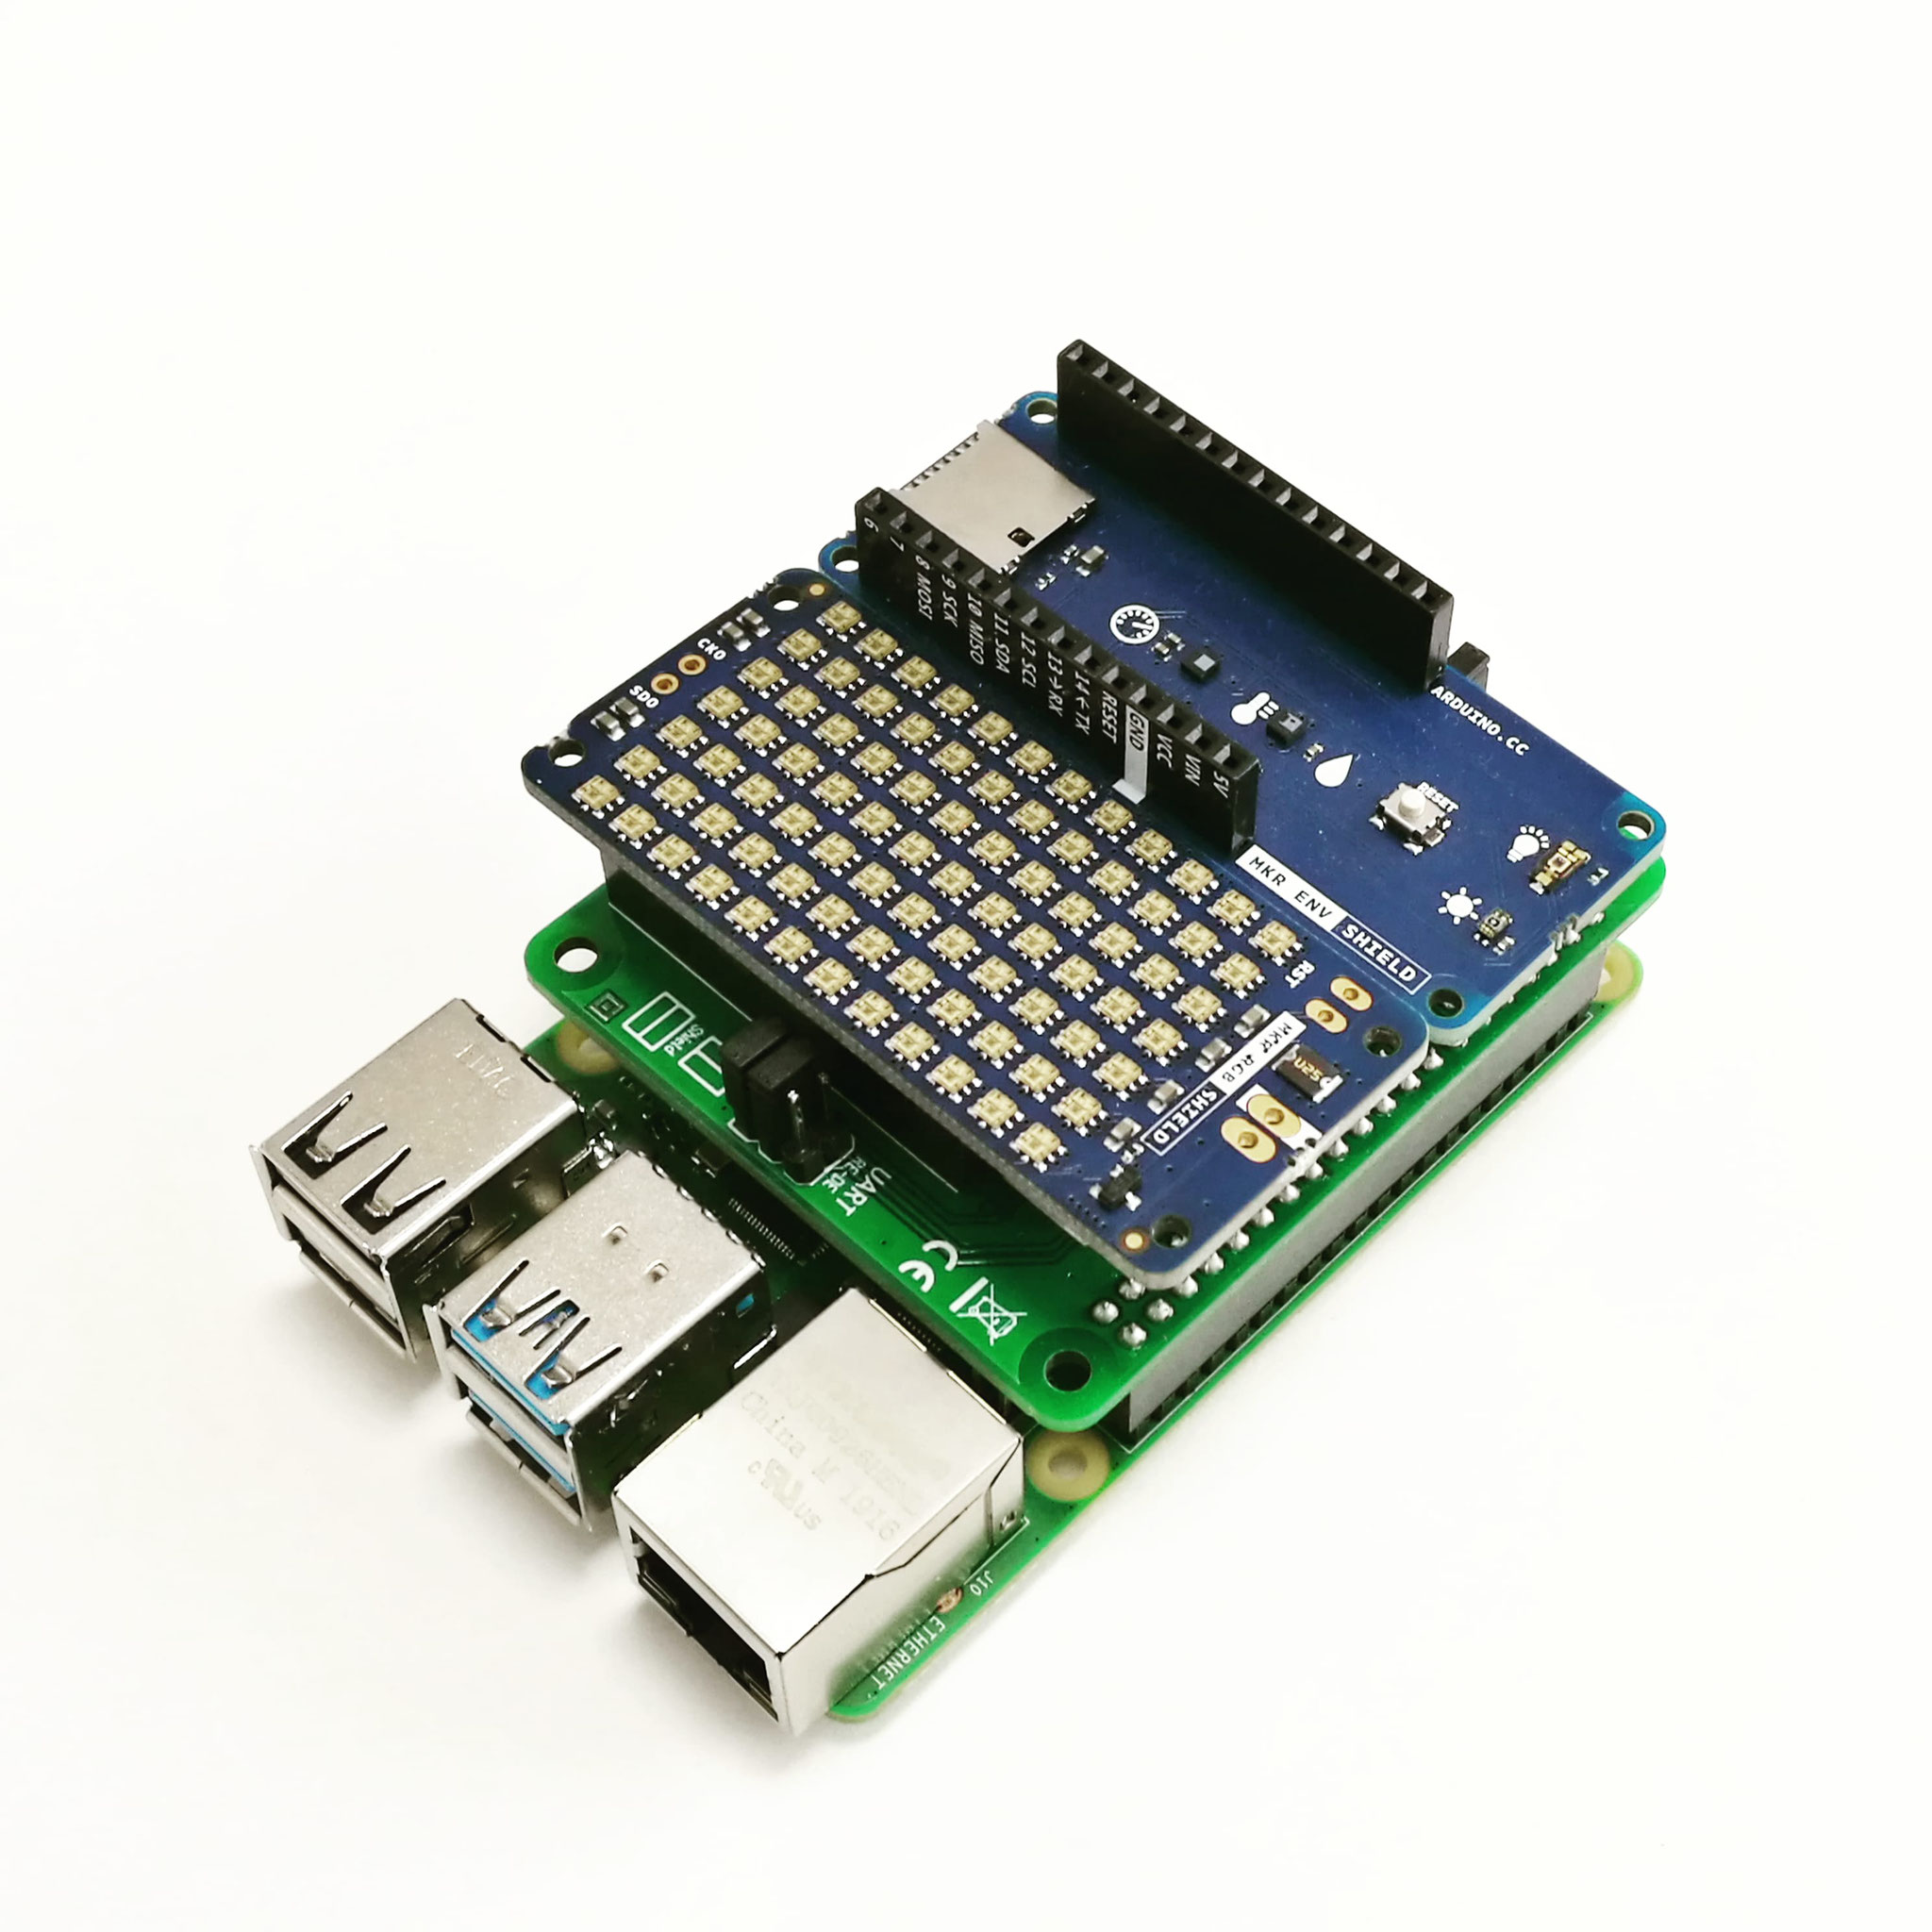 Raspberry HAT for adapting Arduino MKR shields